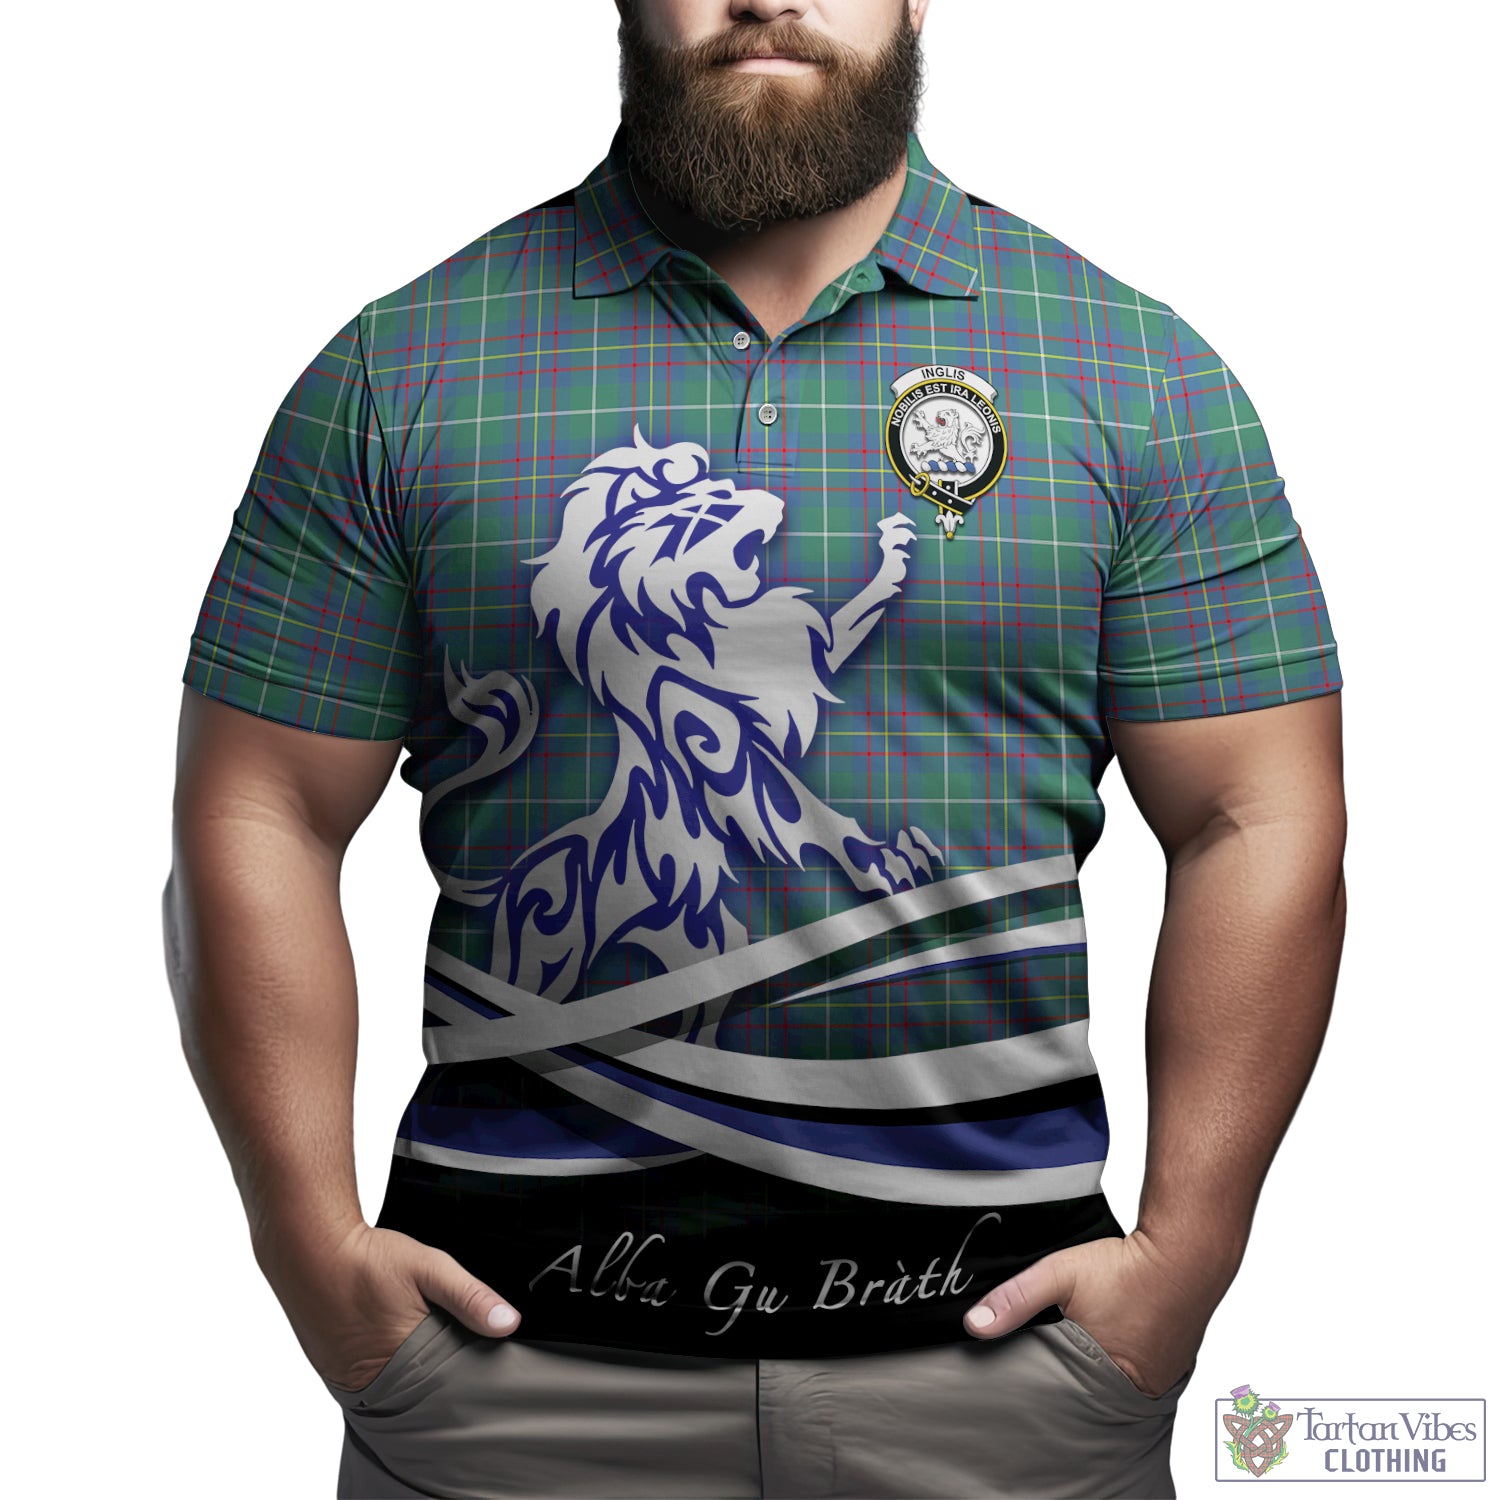 inglis-ancient-tartan-polo-shirt-with-alba-gu-brath-regal-lion-emblem